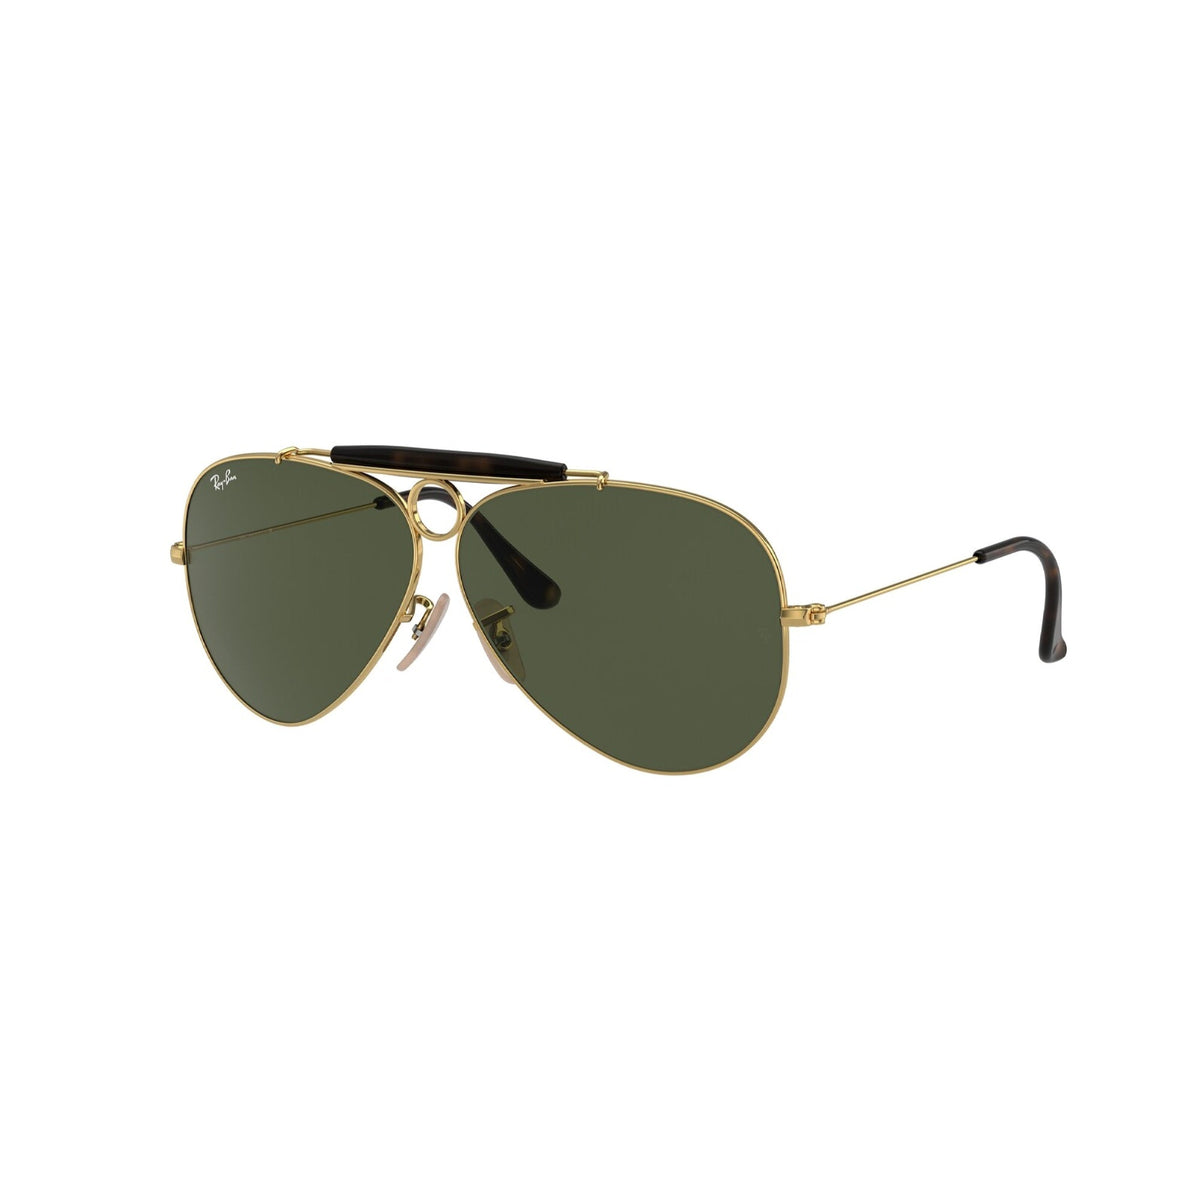 Ray-Ban Unisex Sunglasses Shooter Gold G-15 Green Metal Metal  0RB3138 181 62